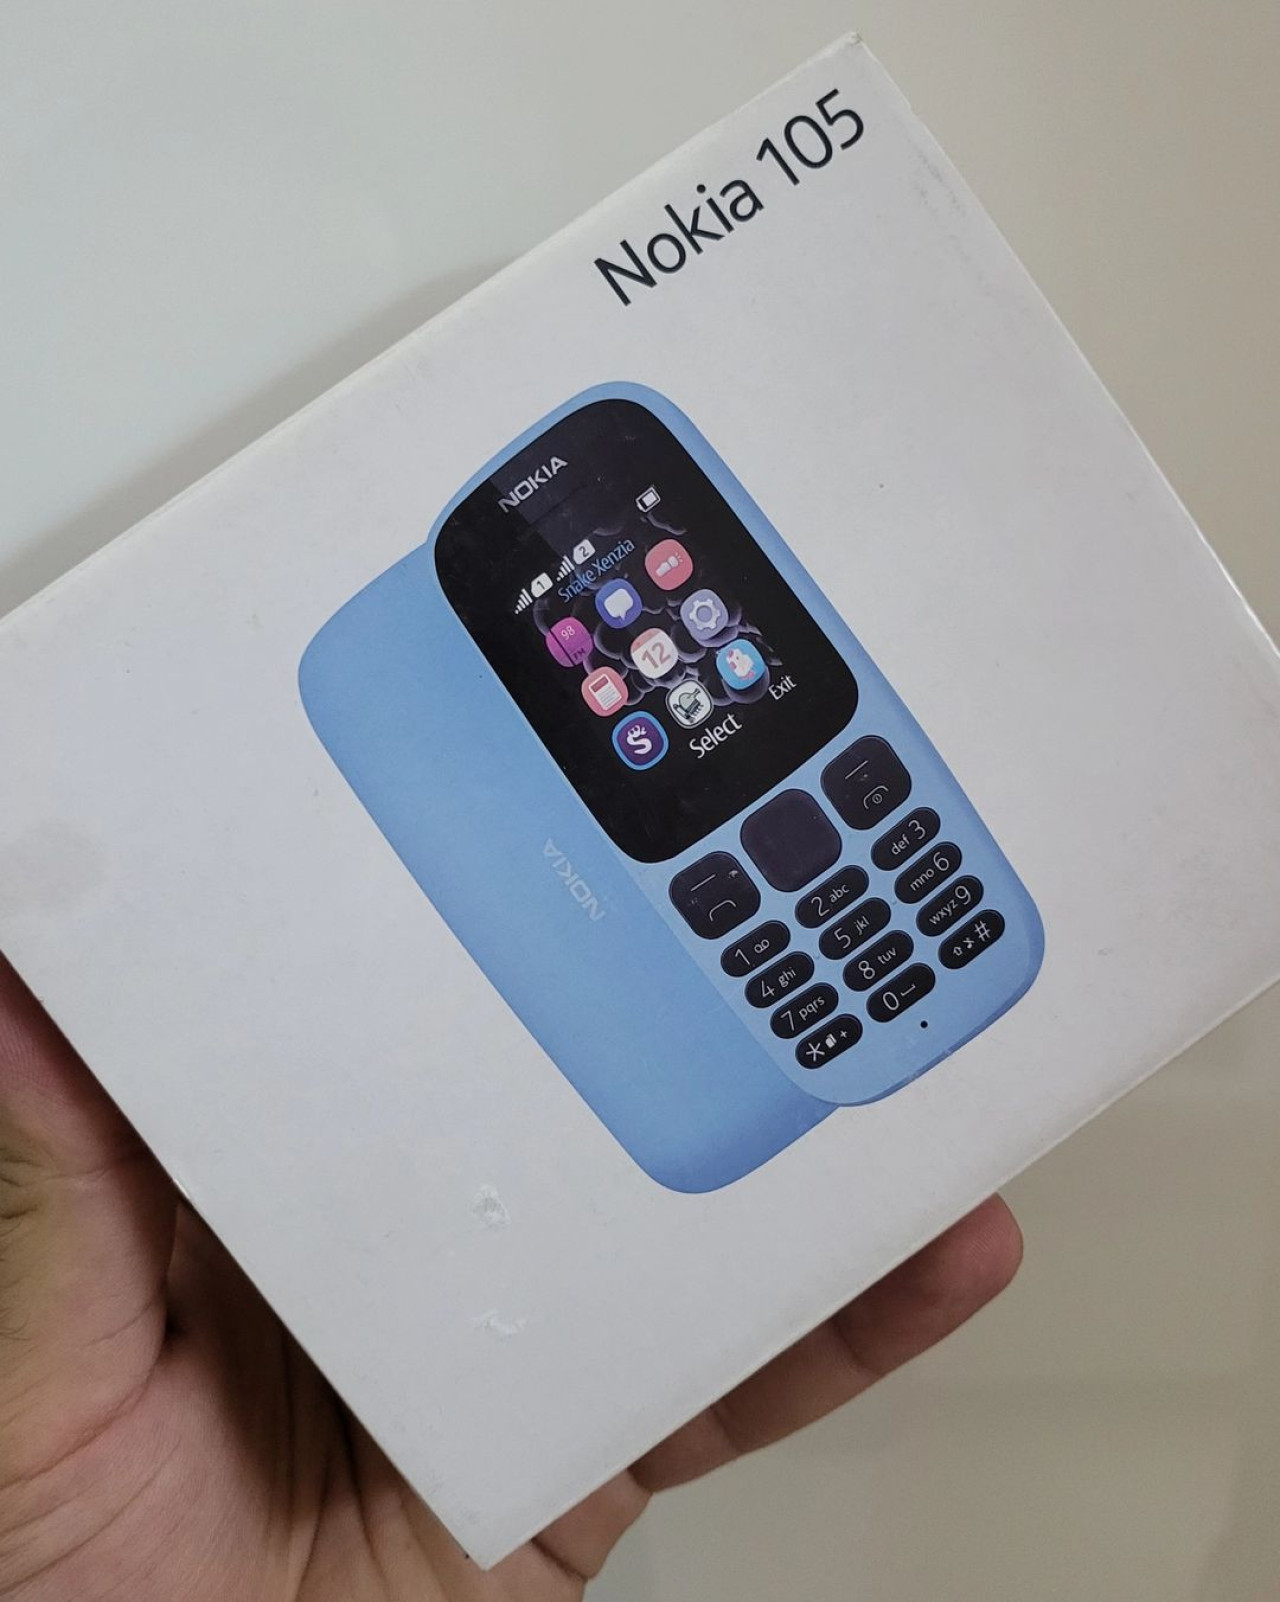 Nokia 105. Foto: Instagram.